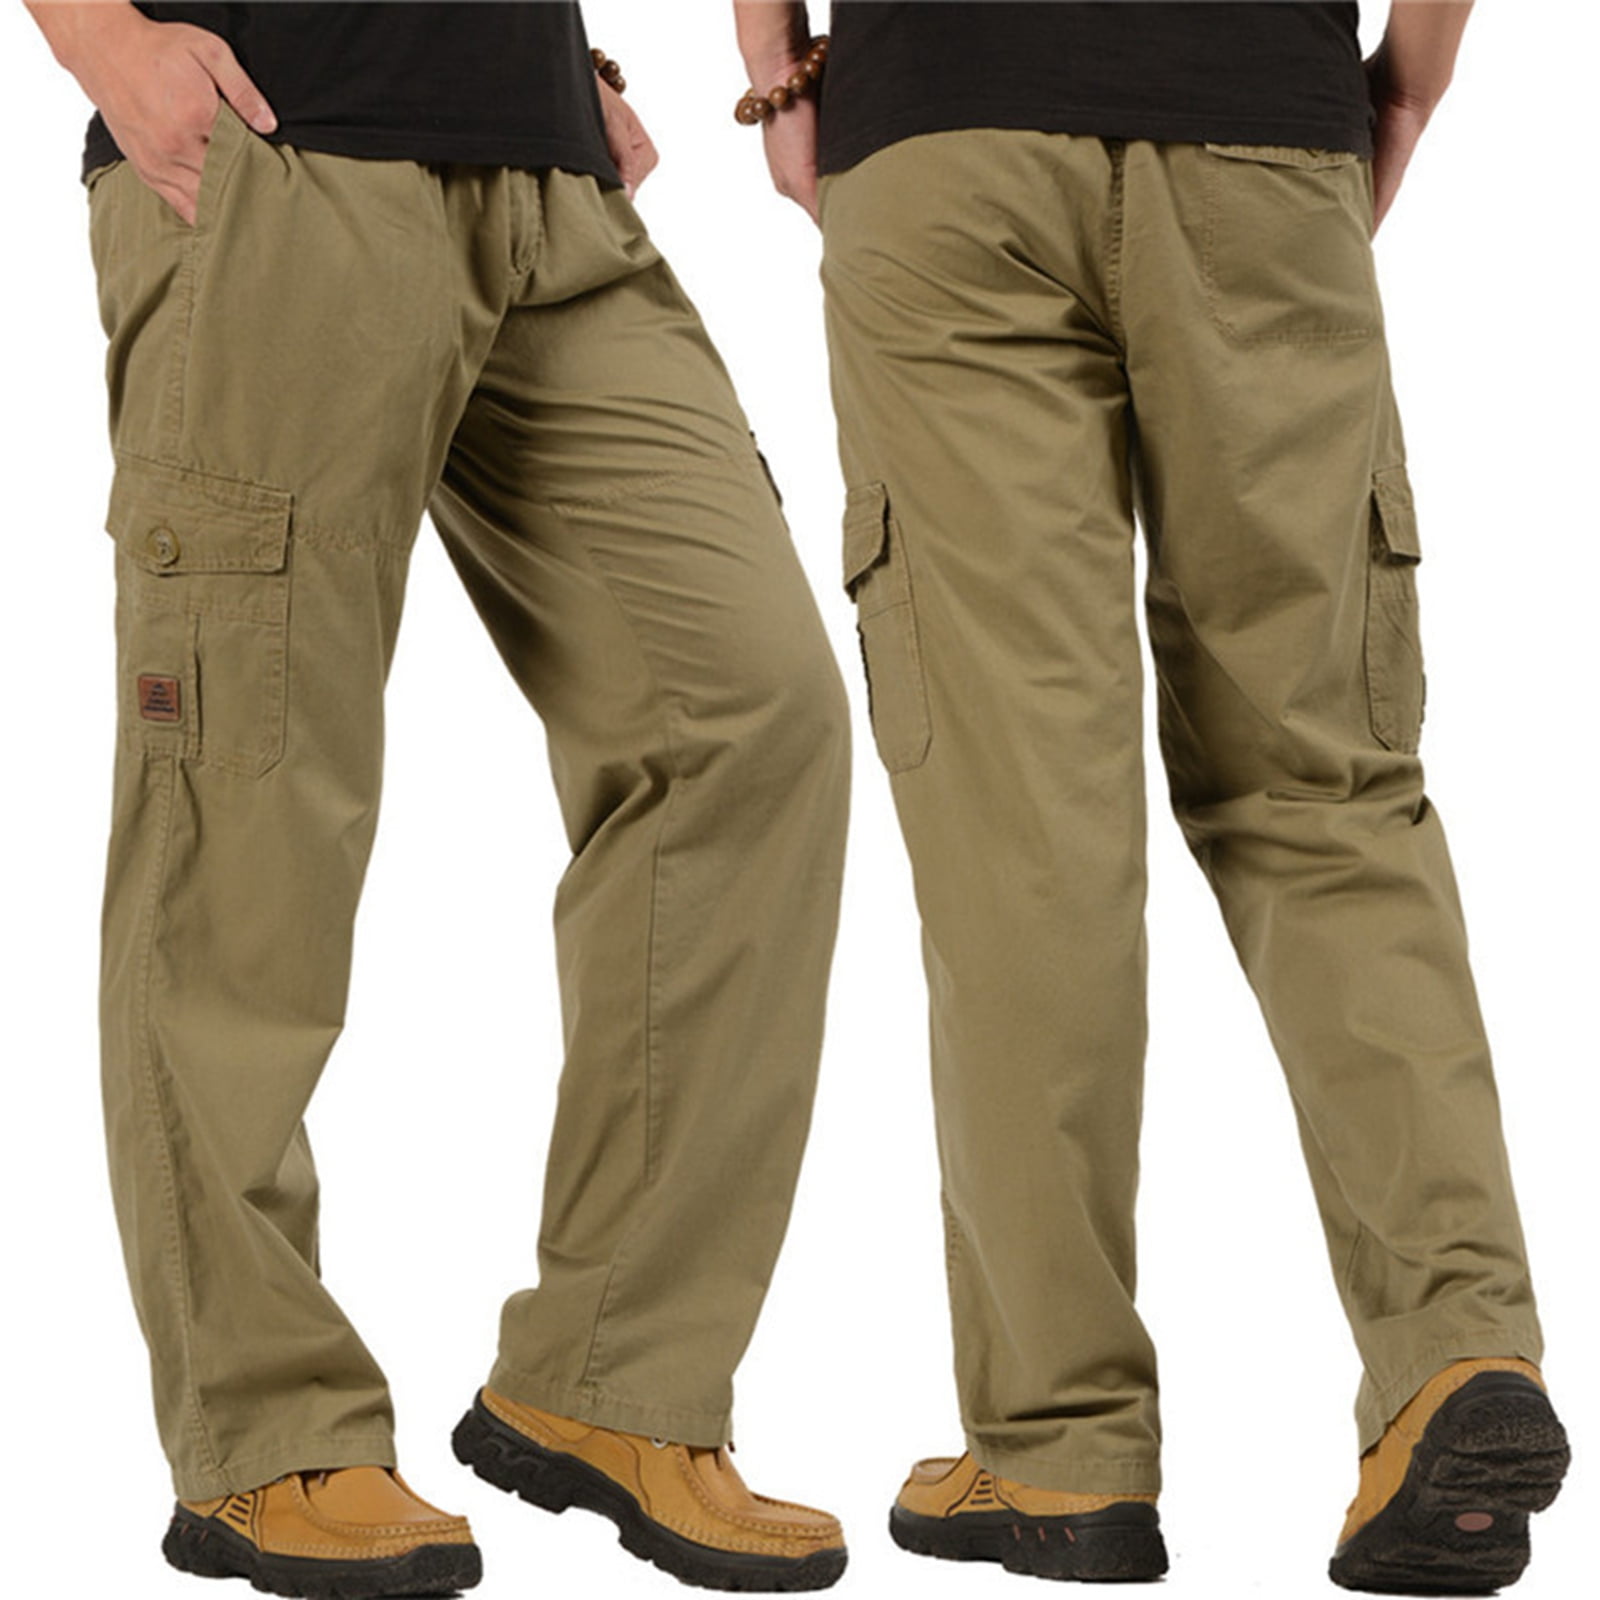 Mens Work Pants Outdoor Hiking Pants Lightweight Cargo Pants Military ...